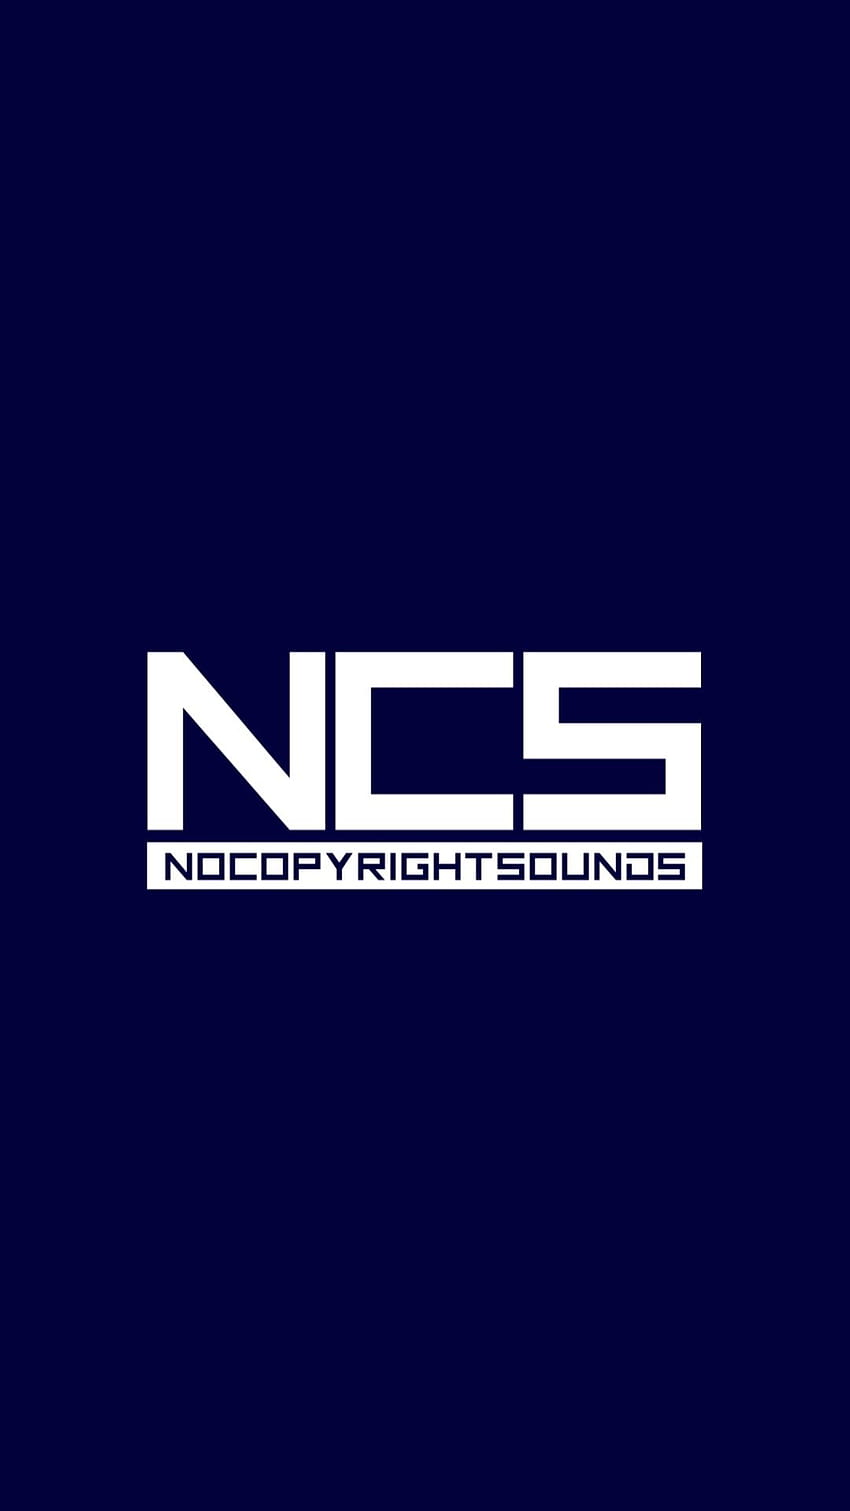 NCS logo edited HD phone wallpaper